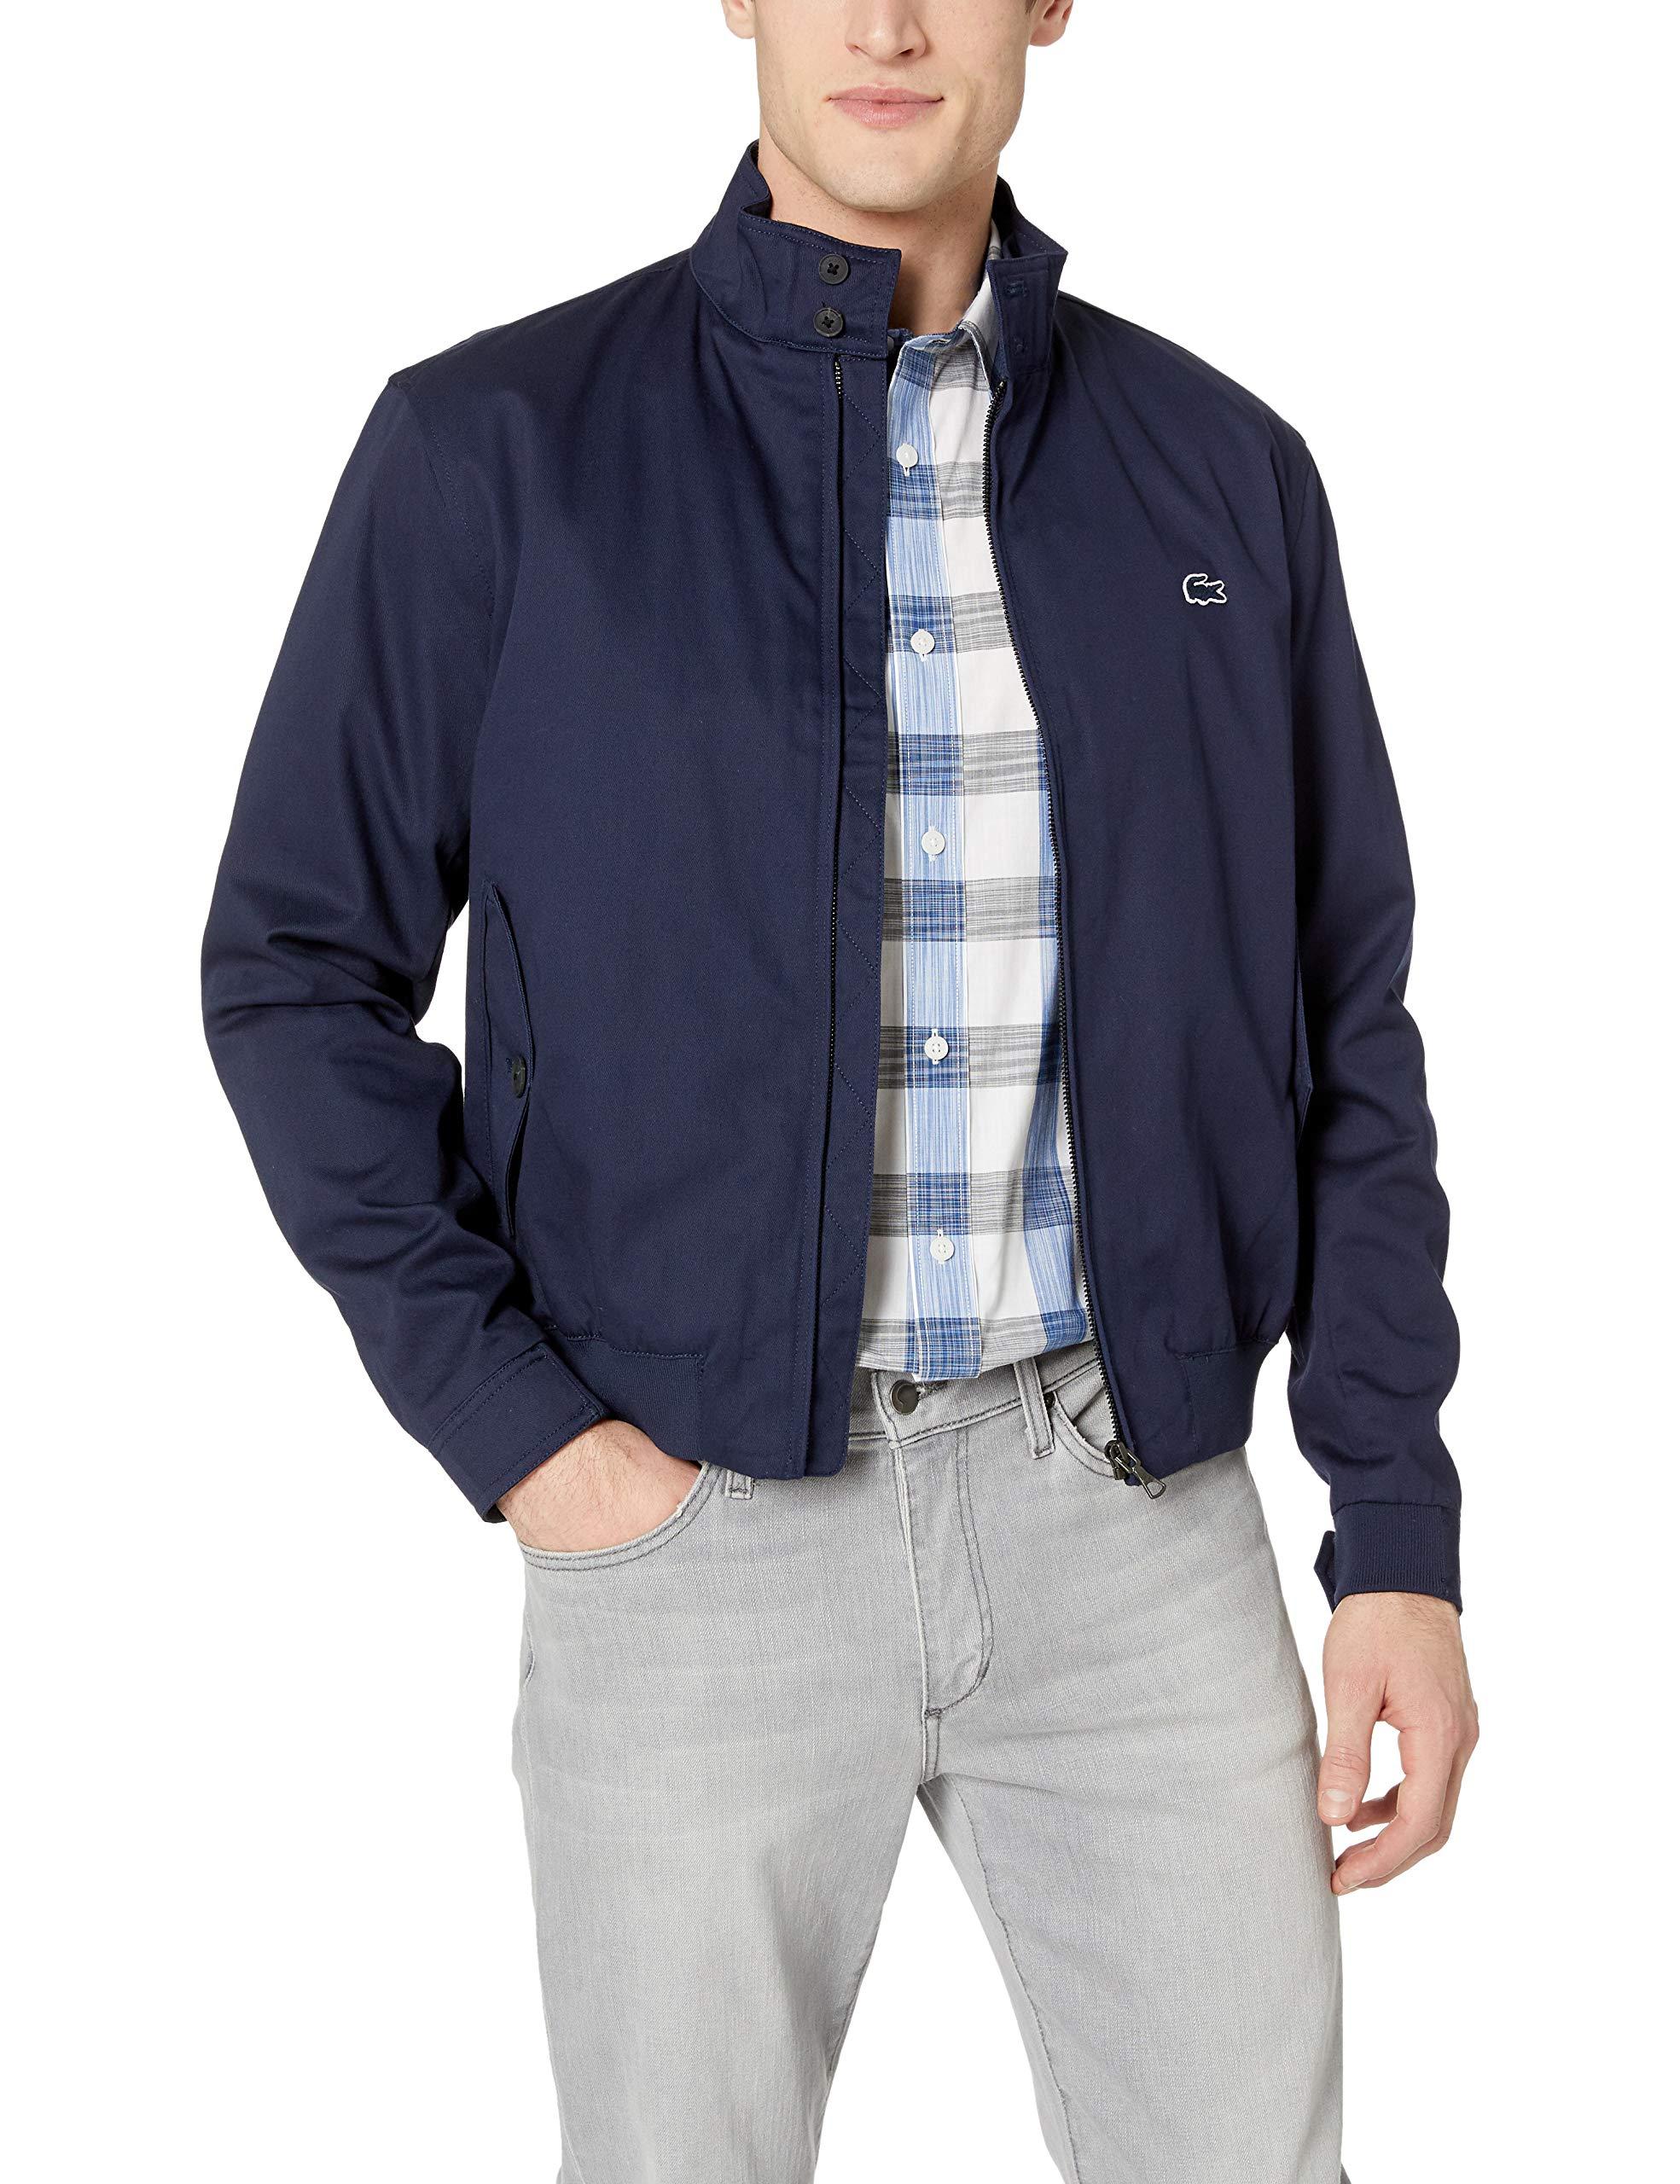 Lacoste Lightweight Harrington Cotton Twill Jacket in Navy Blue (Blue) for  Men - Lyst